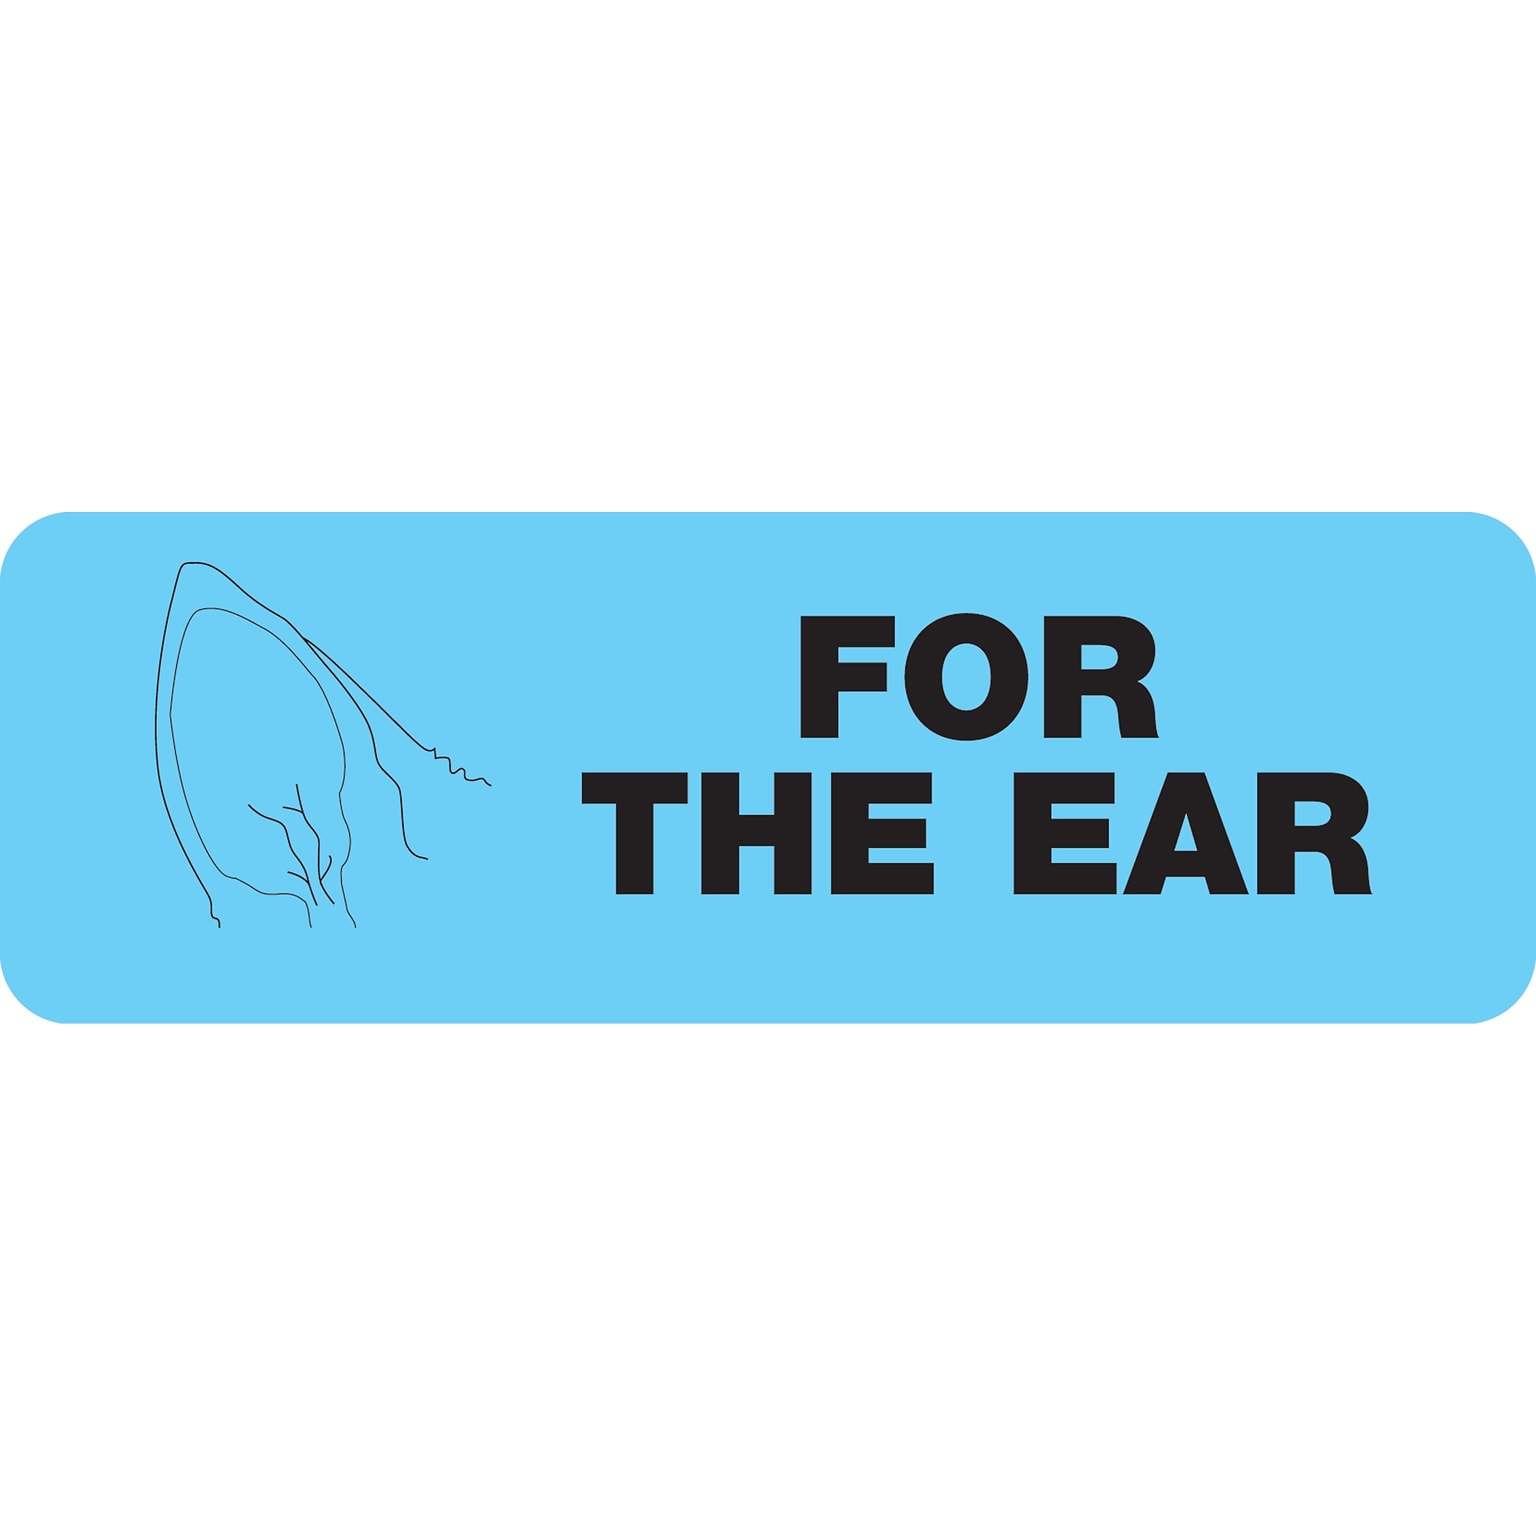 Medical Arts Press® Veterinary Medication Instruction Labels, For the Ear, Light Blue, 1/2x1-1/2, 500 Labels